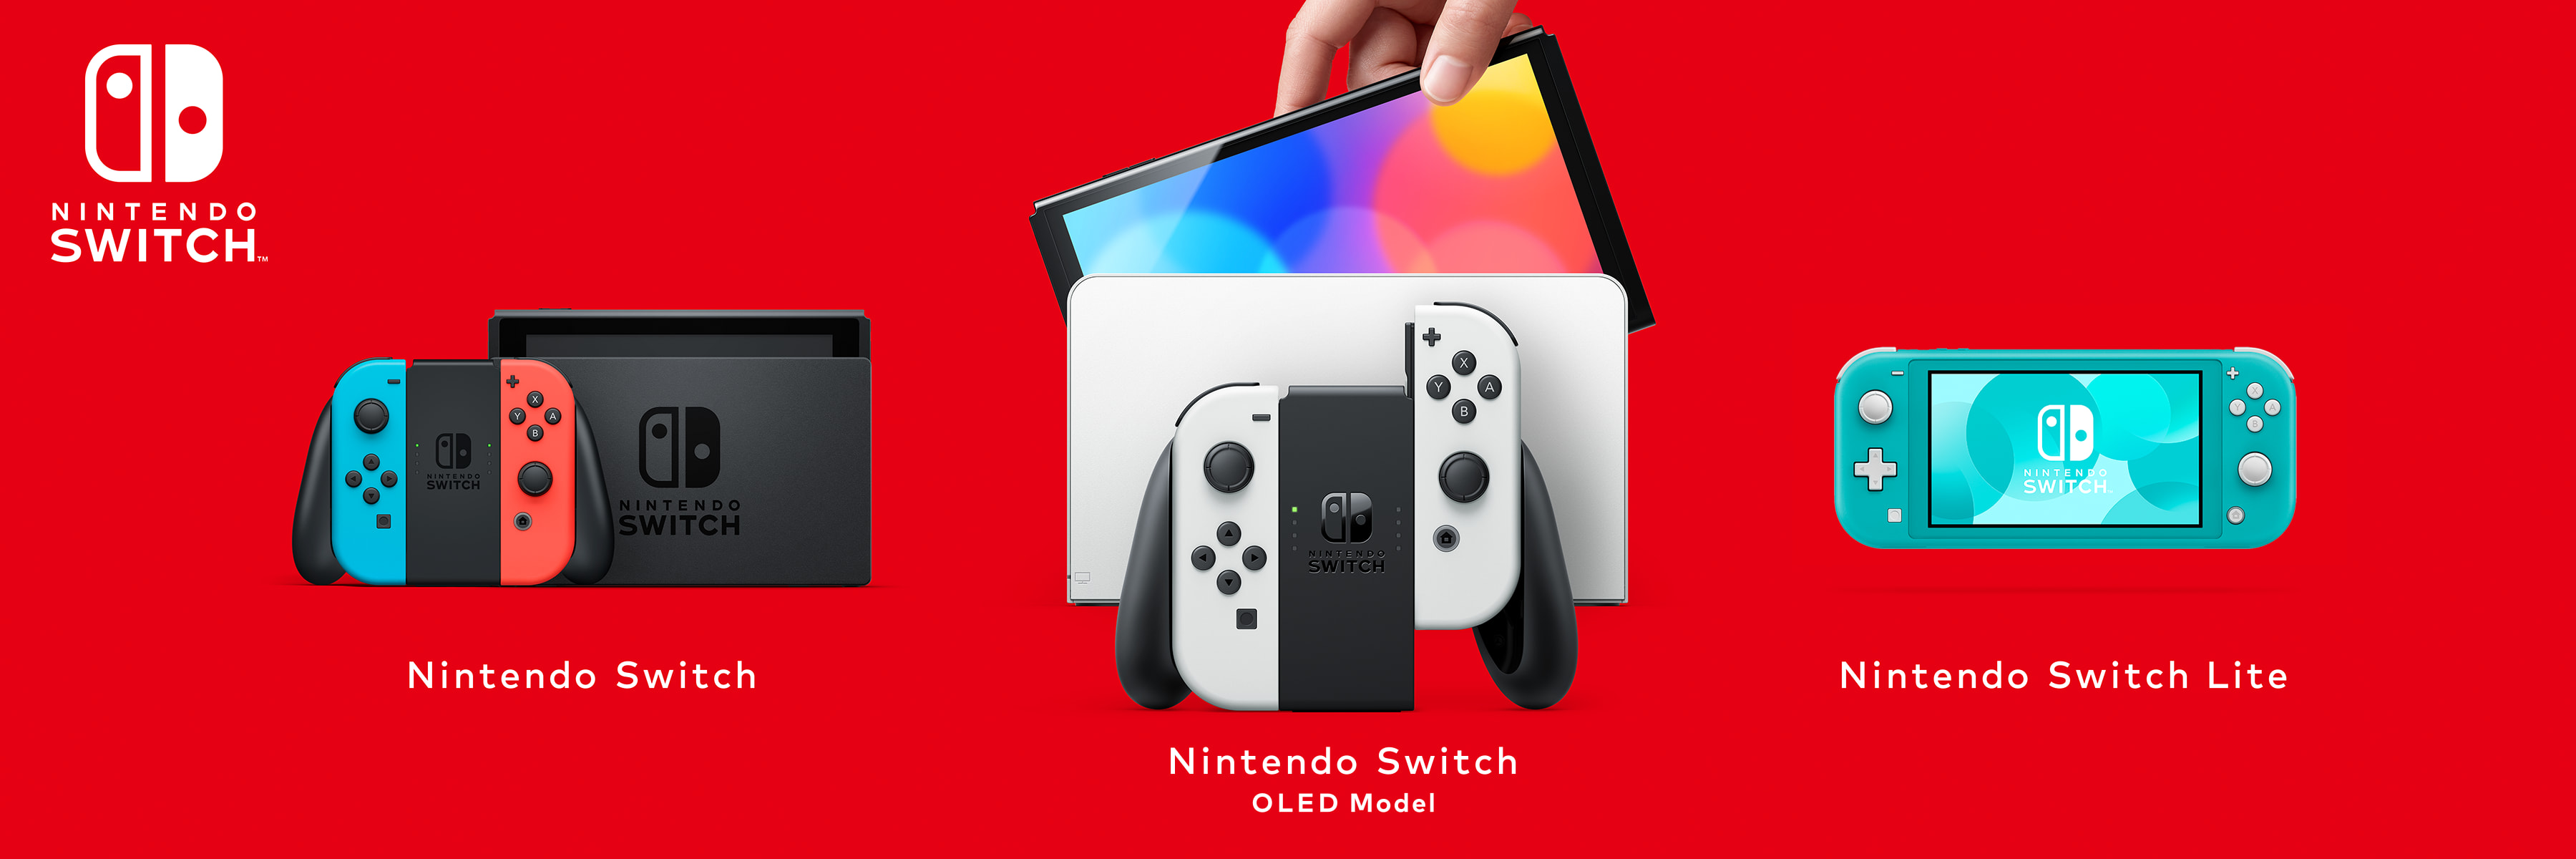 Nintendo Switch family